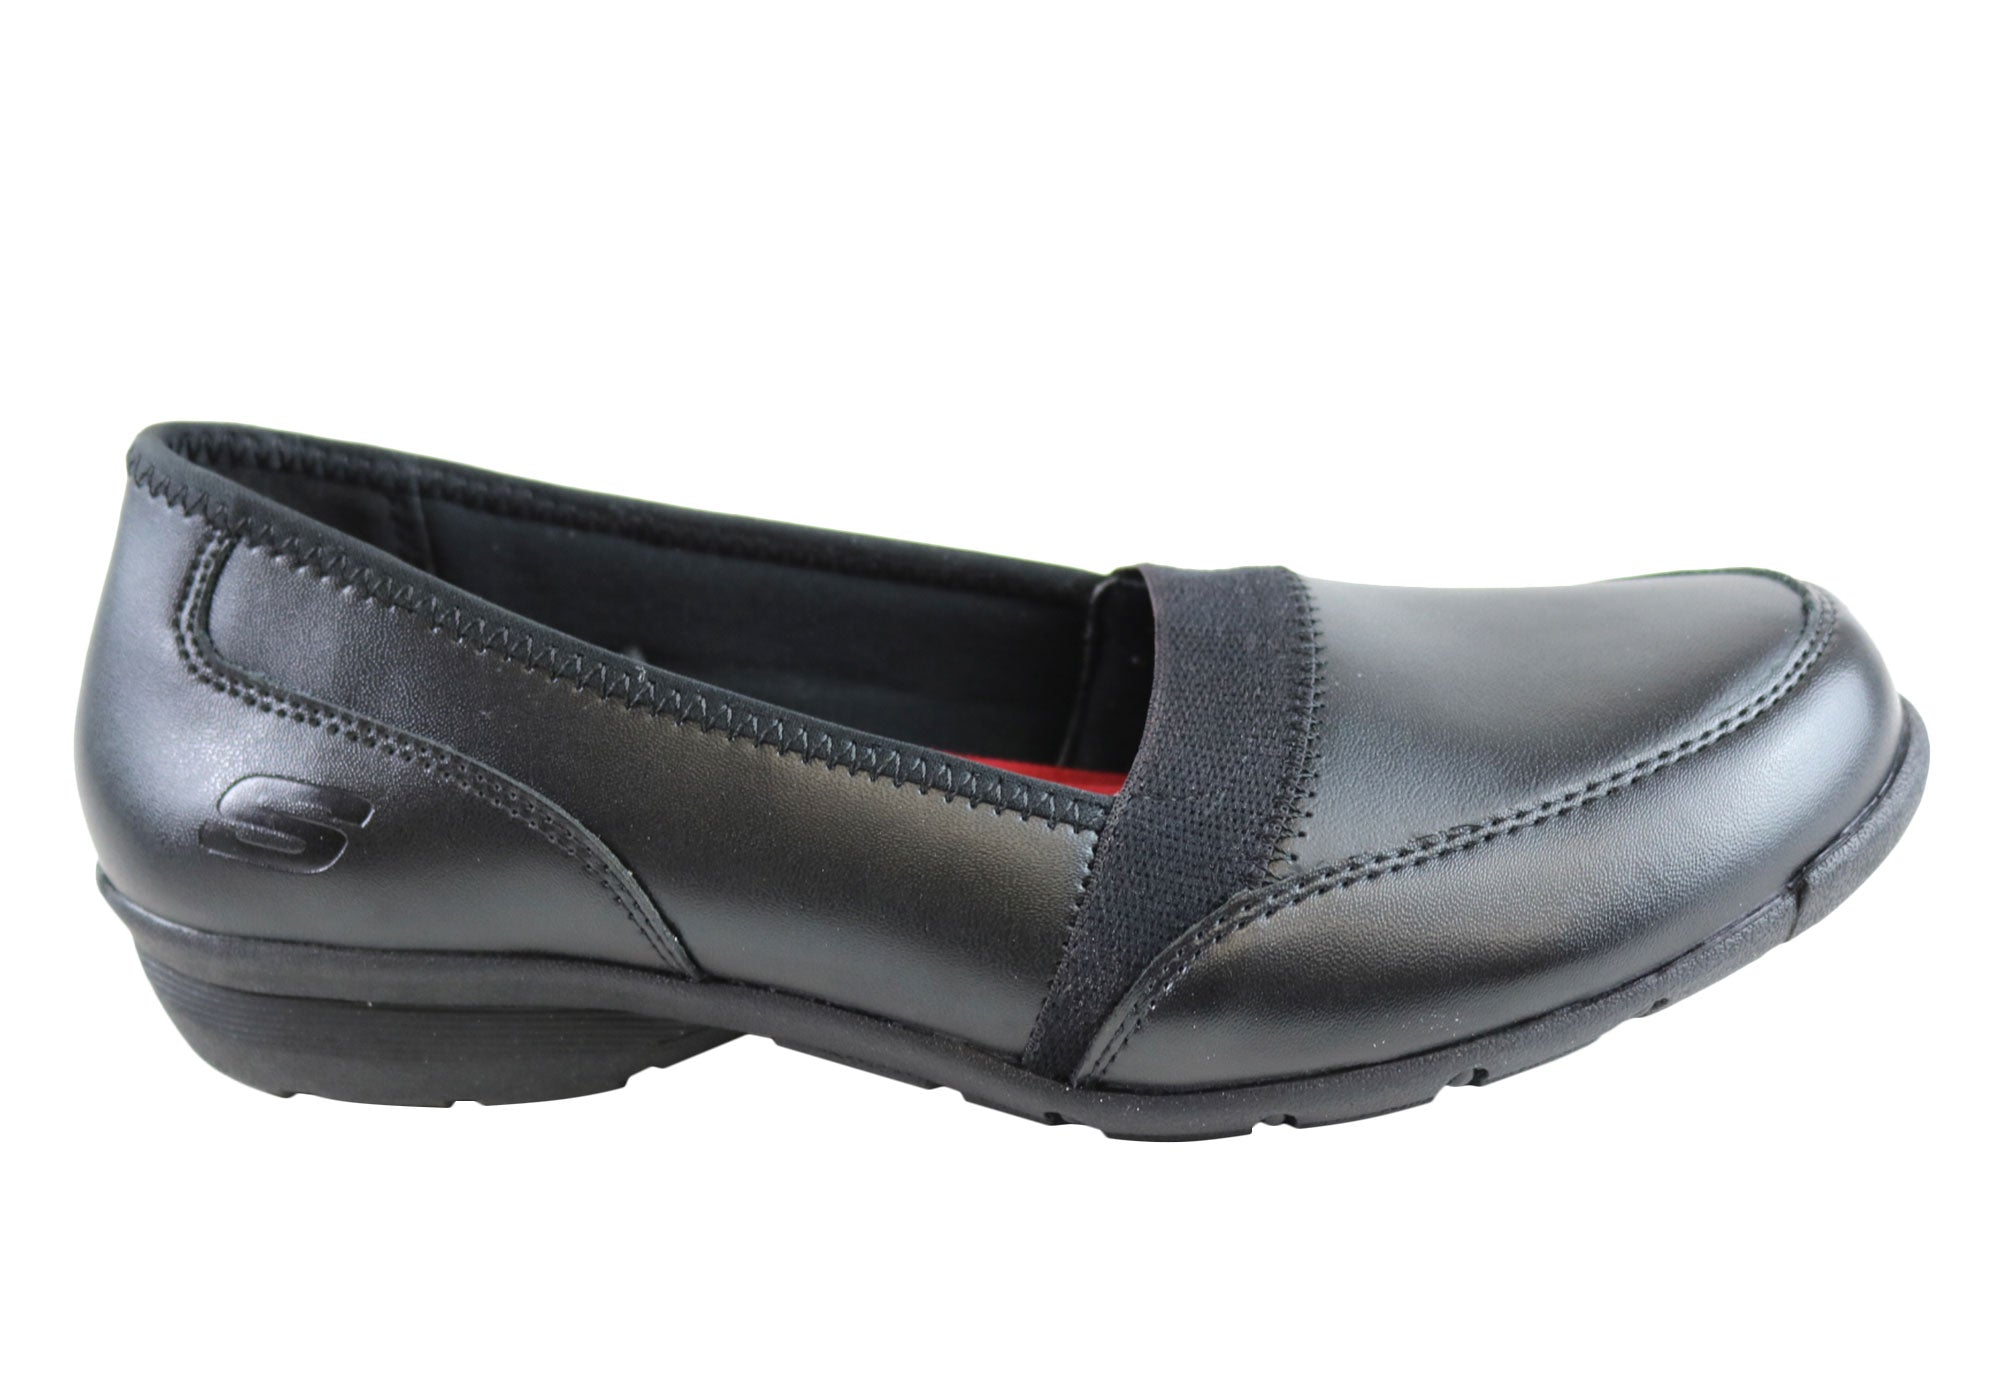 women's black slip resistant work shoes